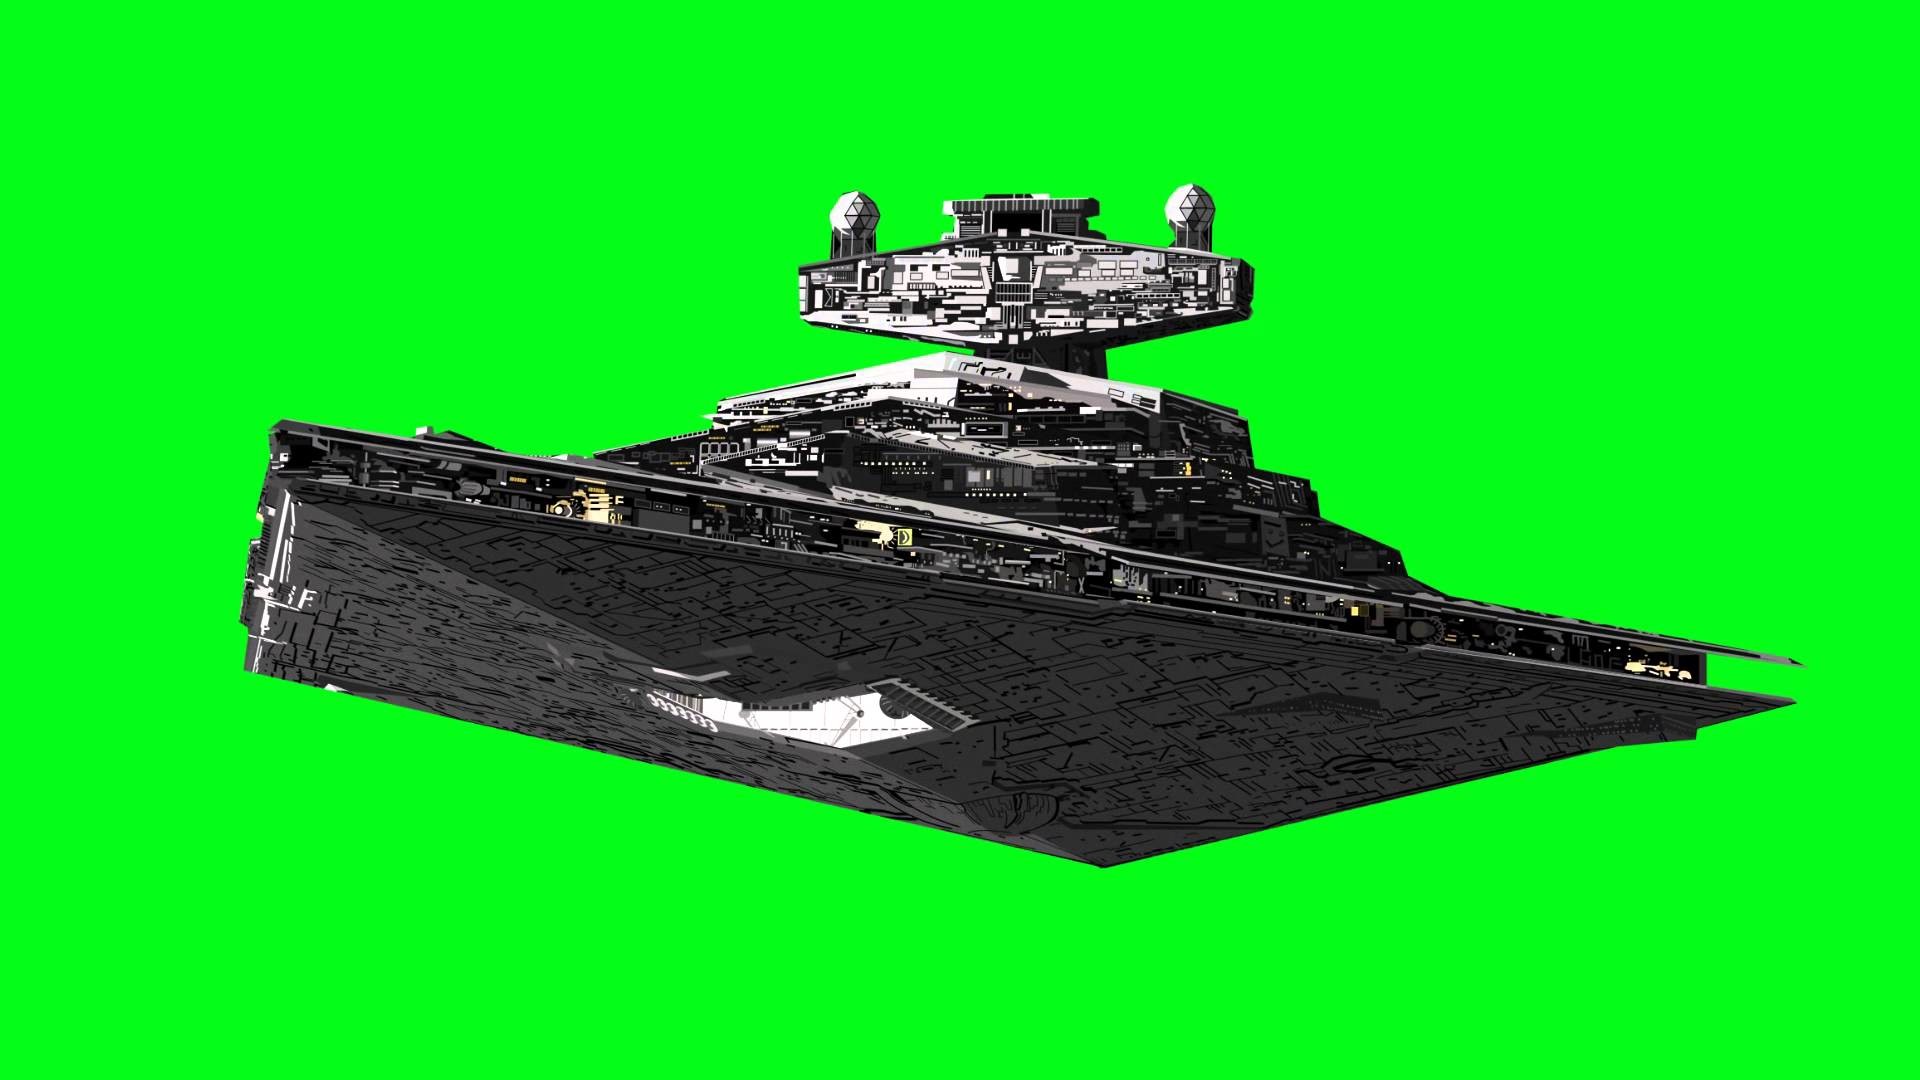 1920x1080 green screen Star Wars Imperial Star Destroyer